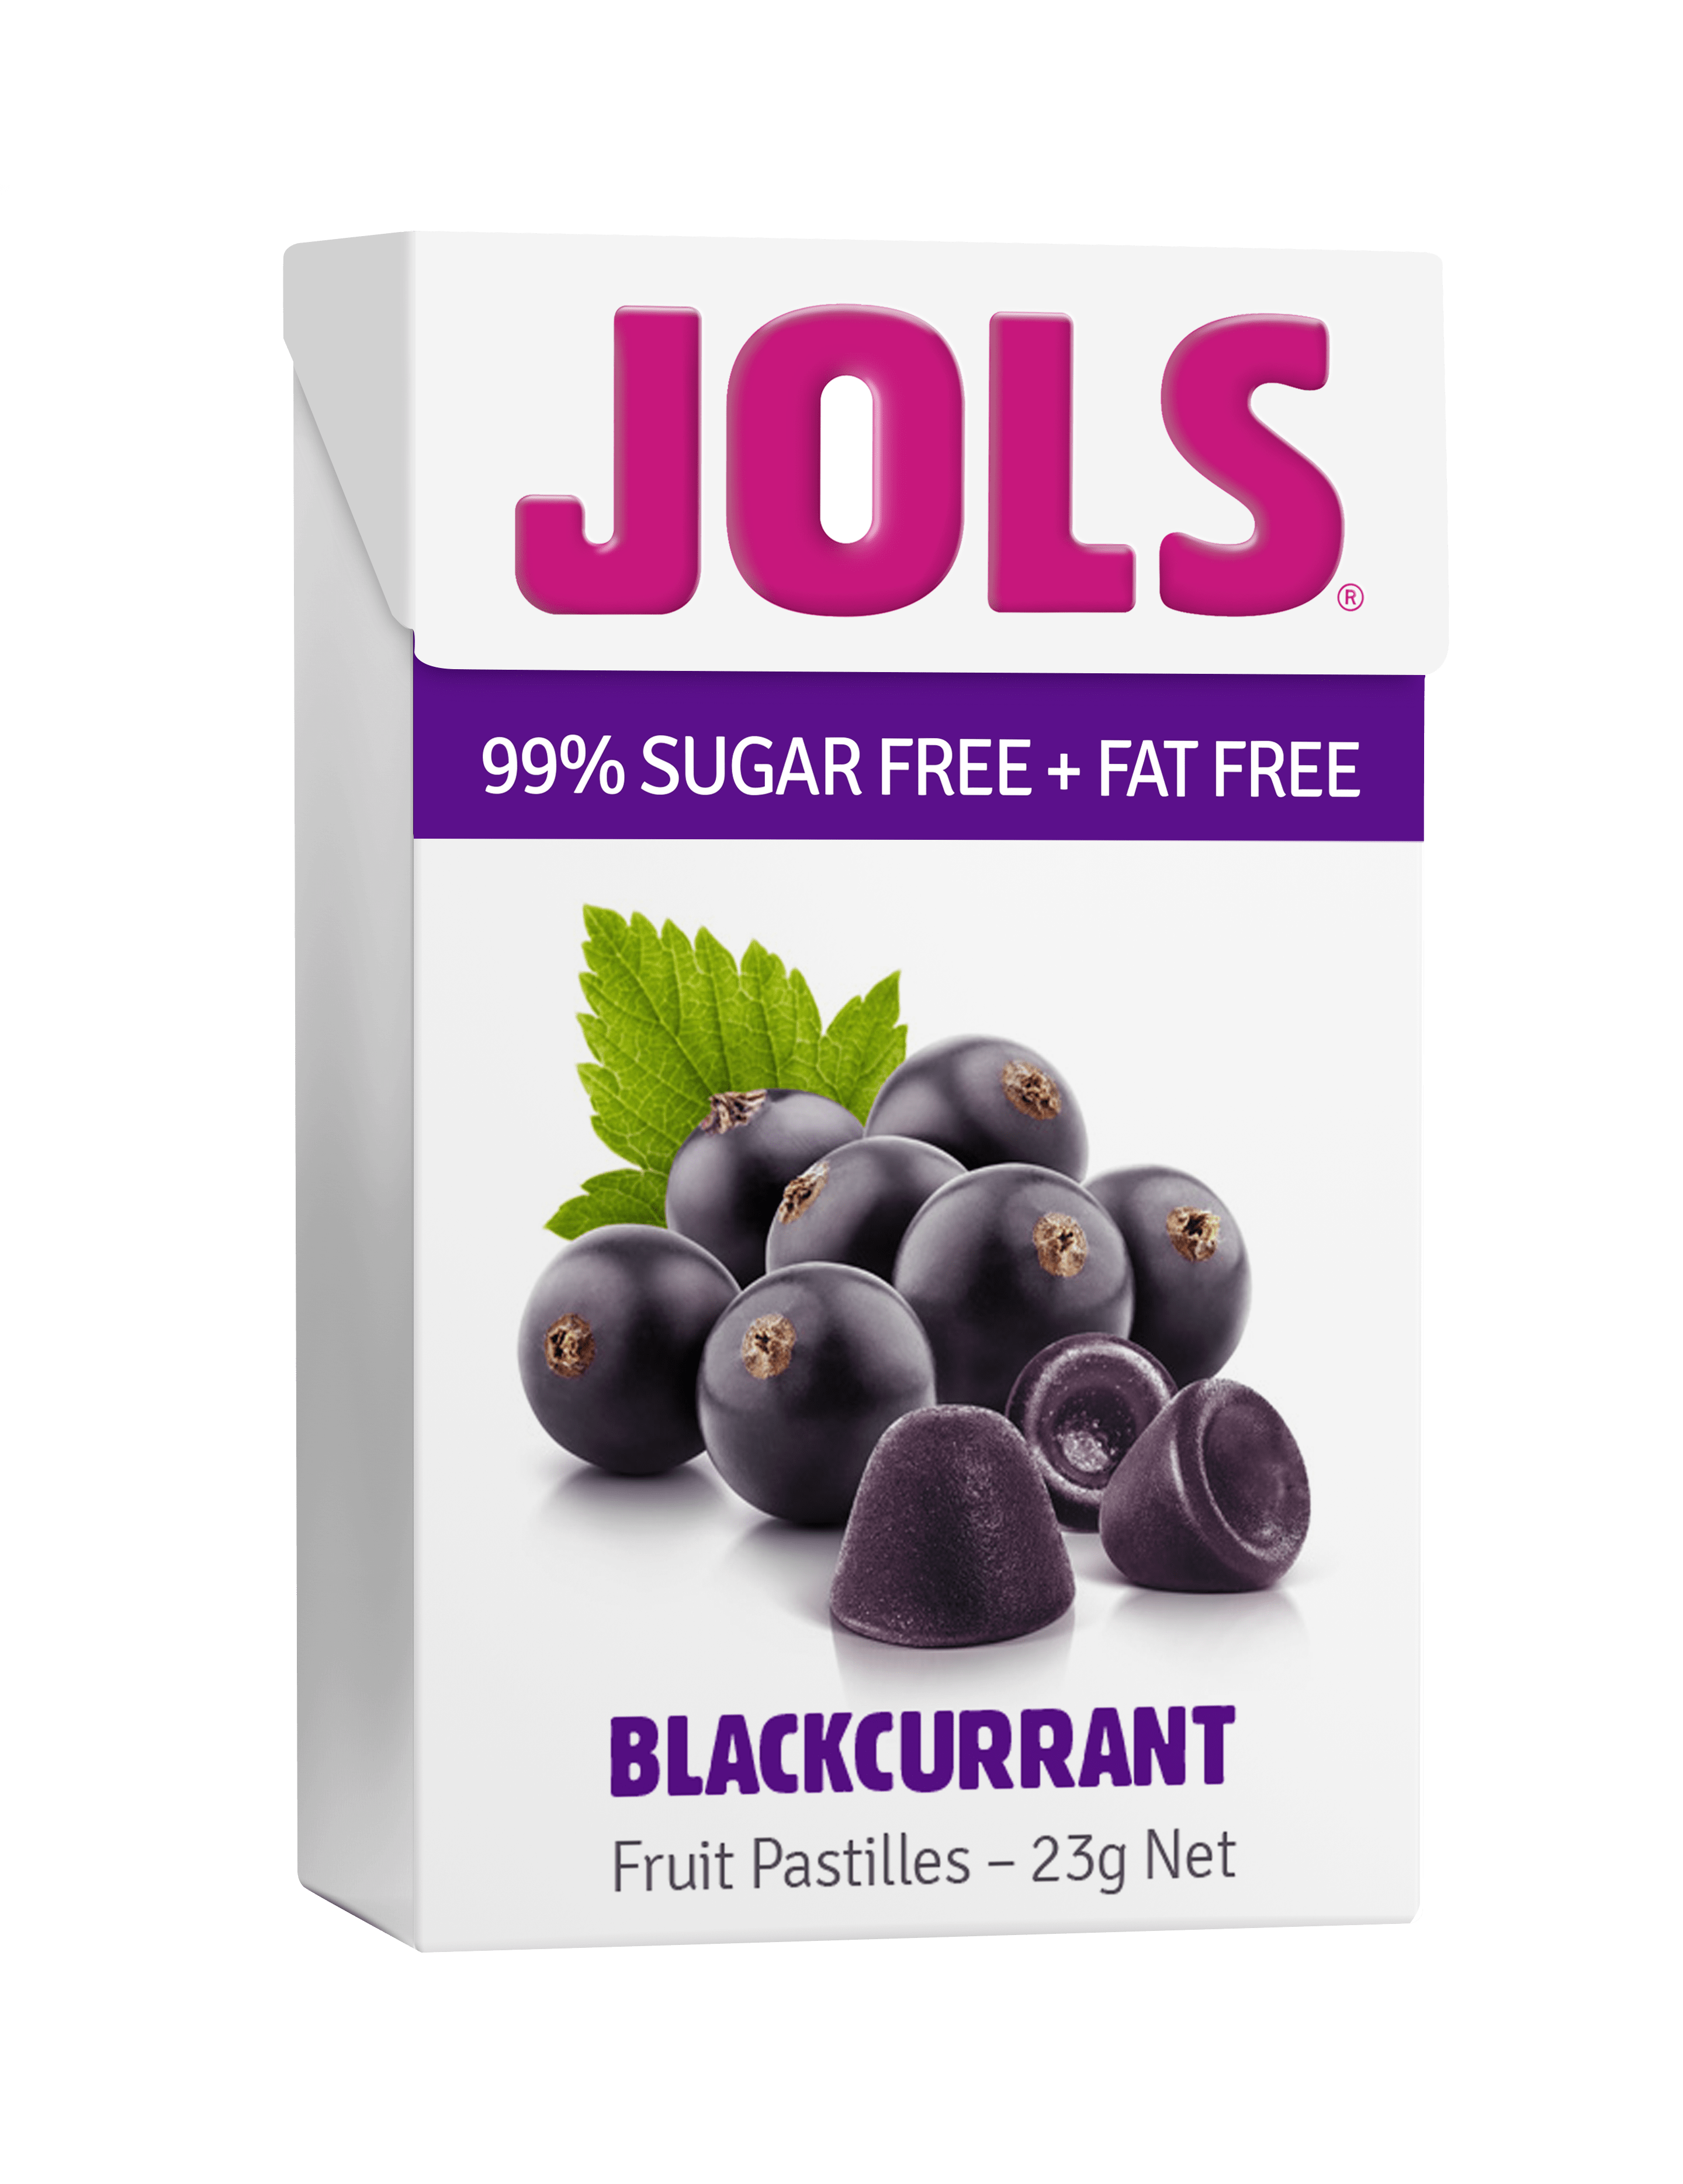 fe-1485-jols-blackcurrant-for-web-min